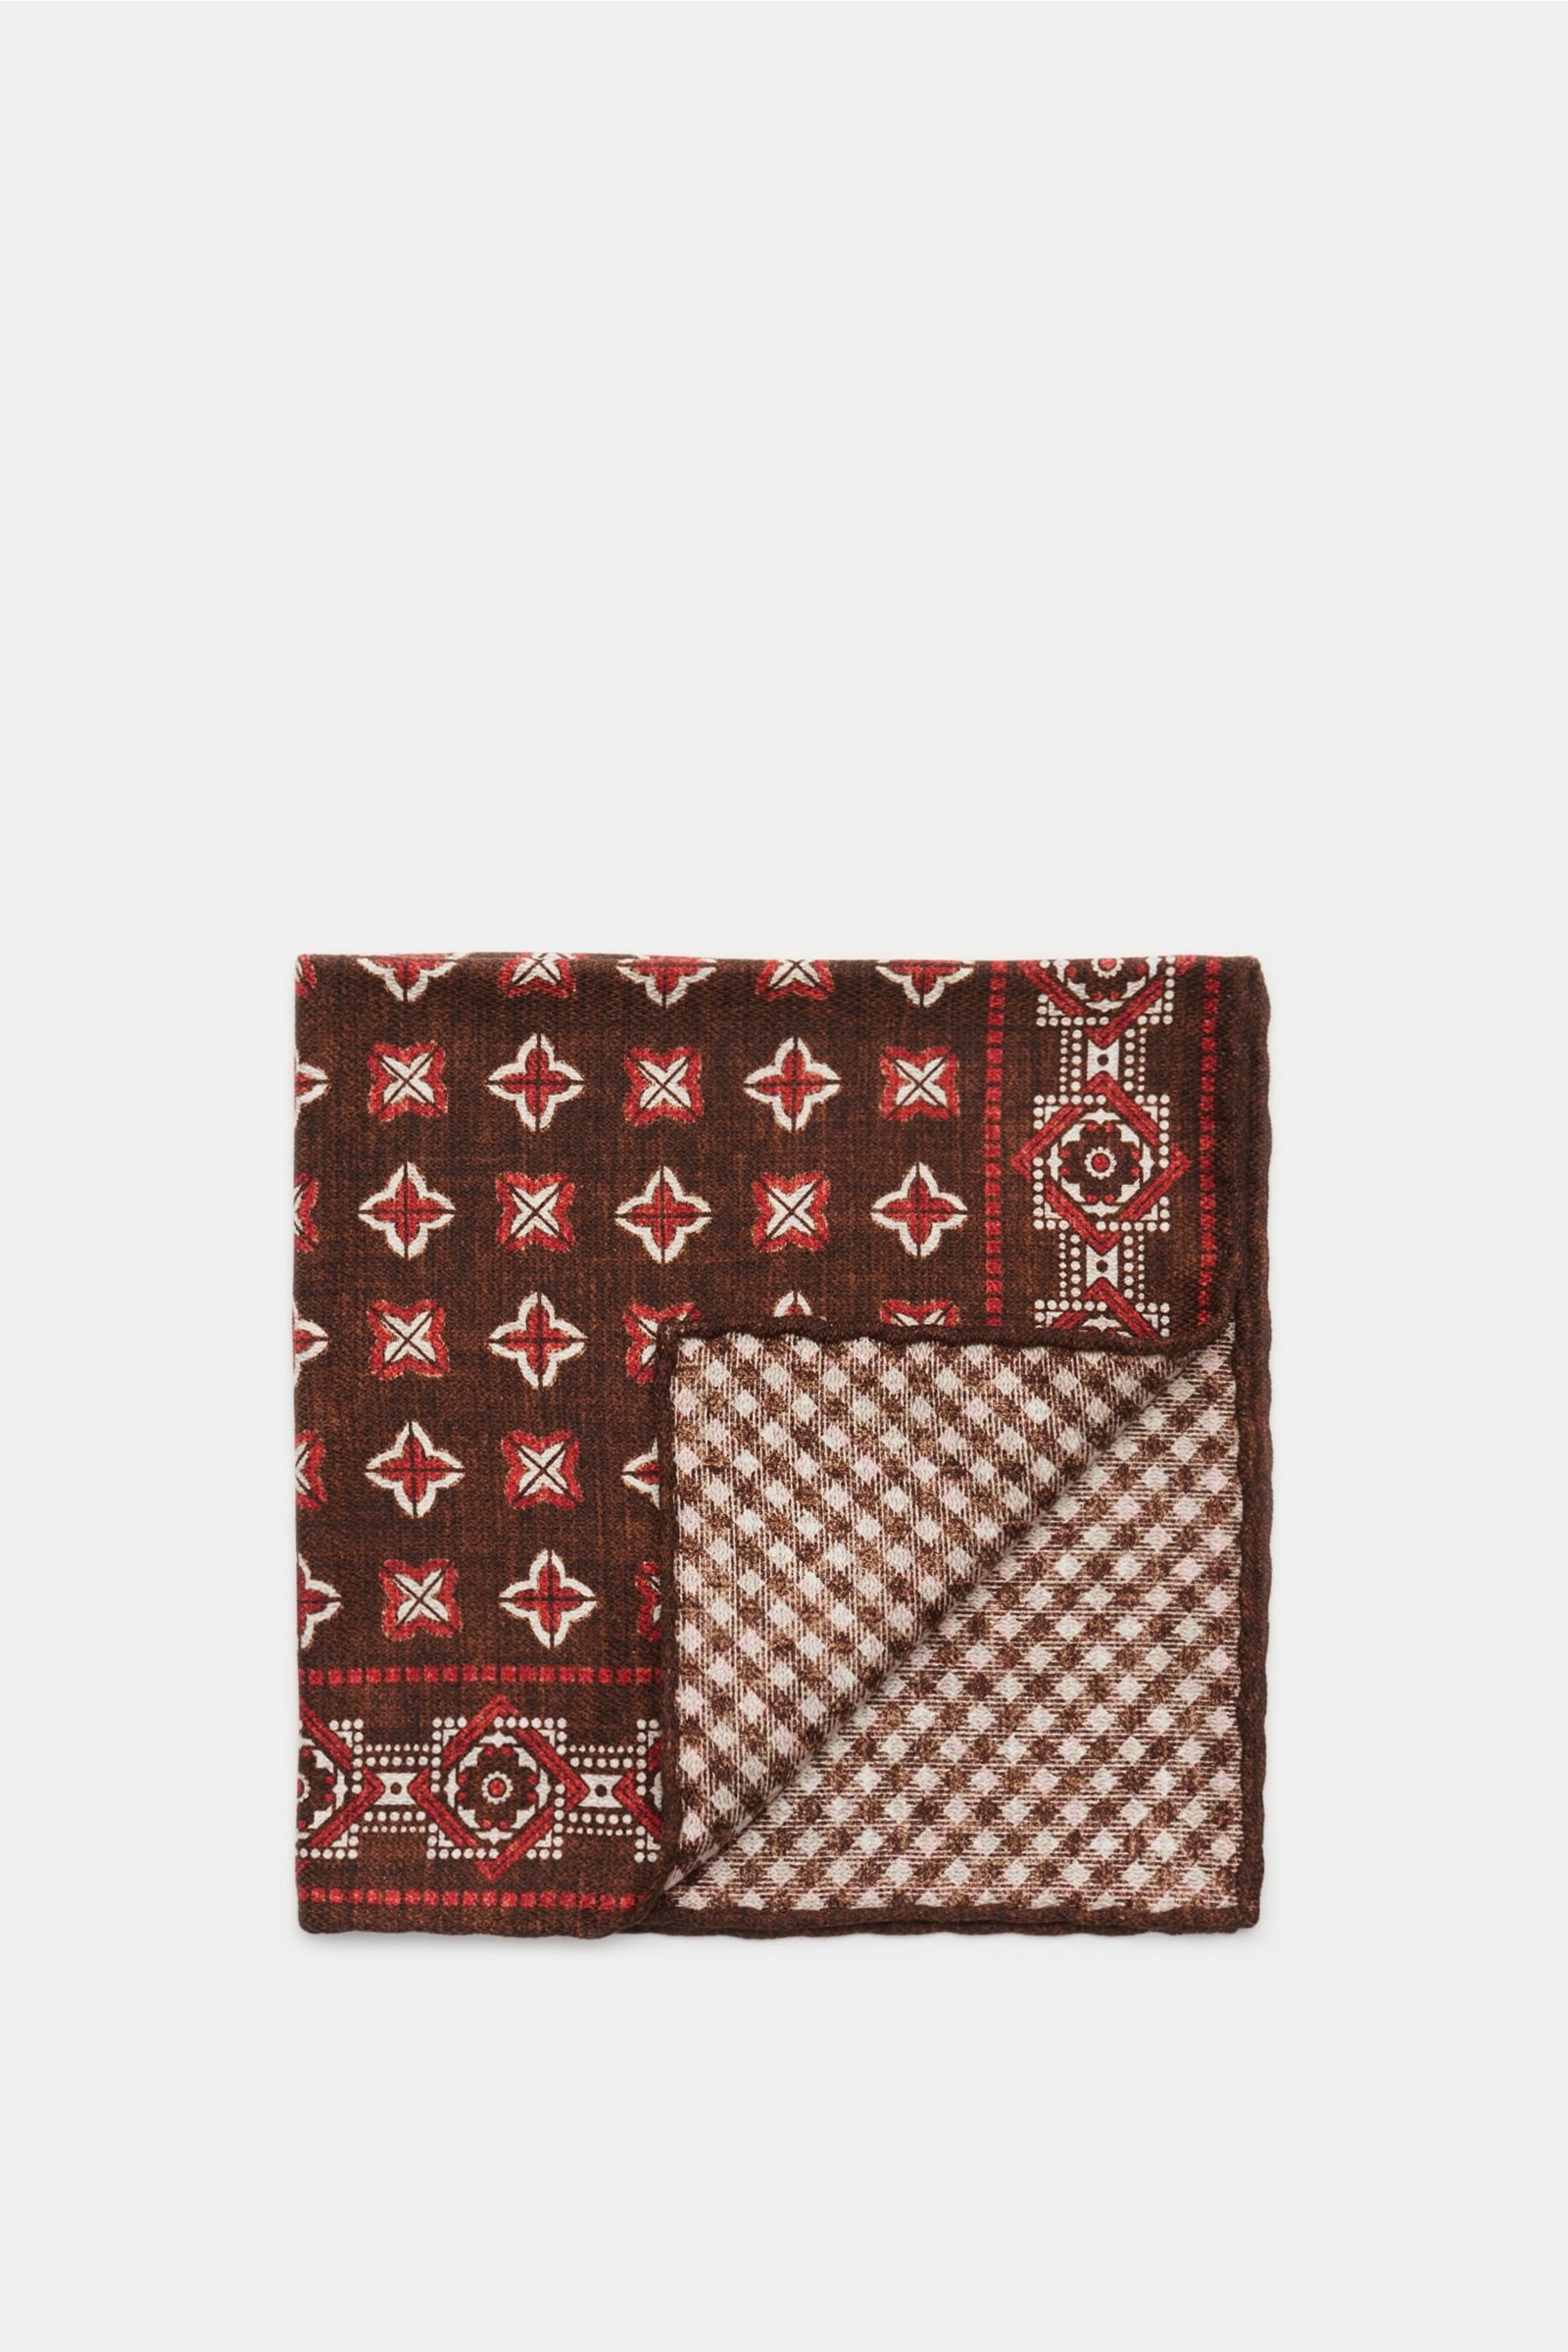 Pocket square brown/red patterned